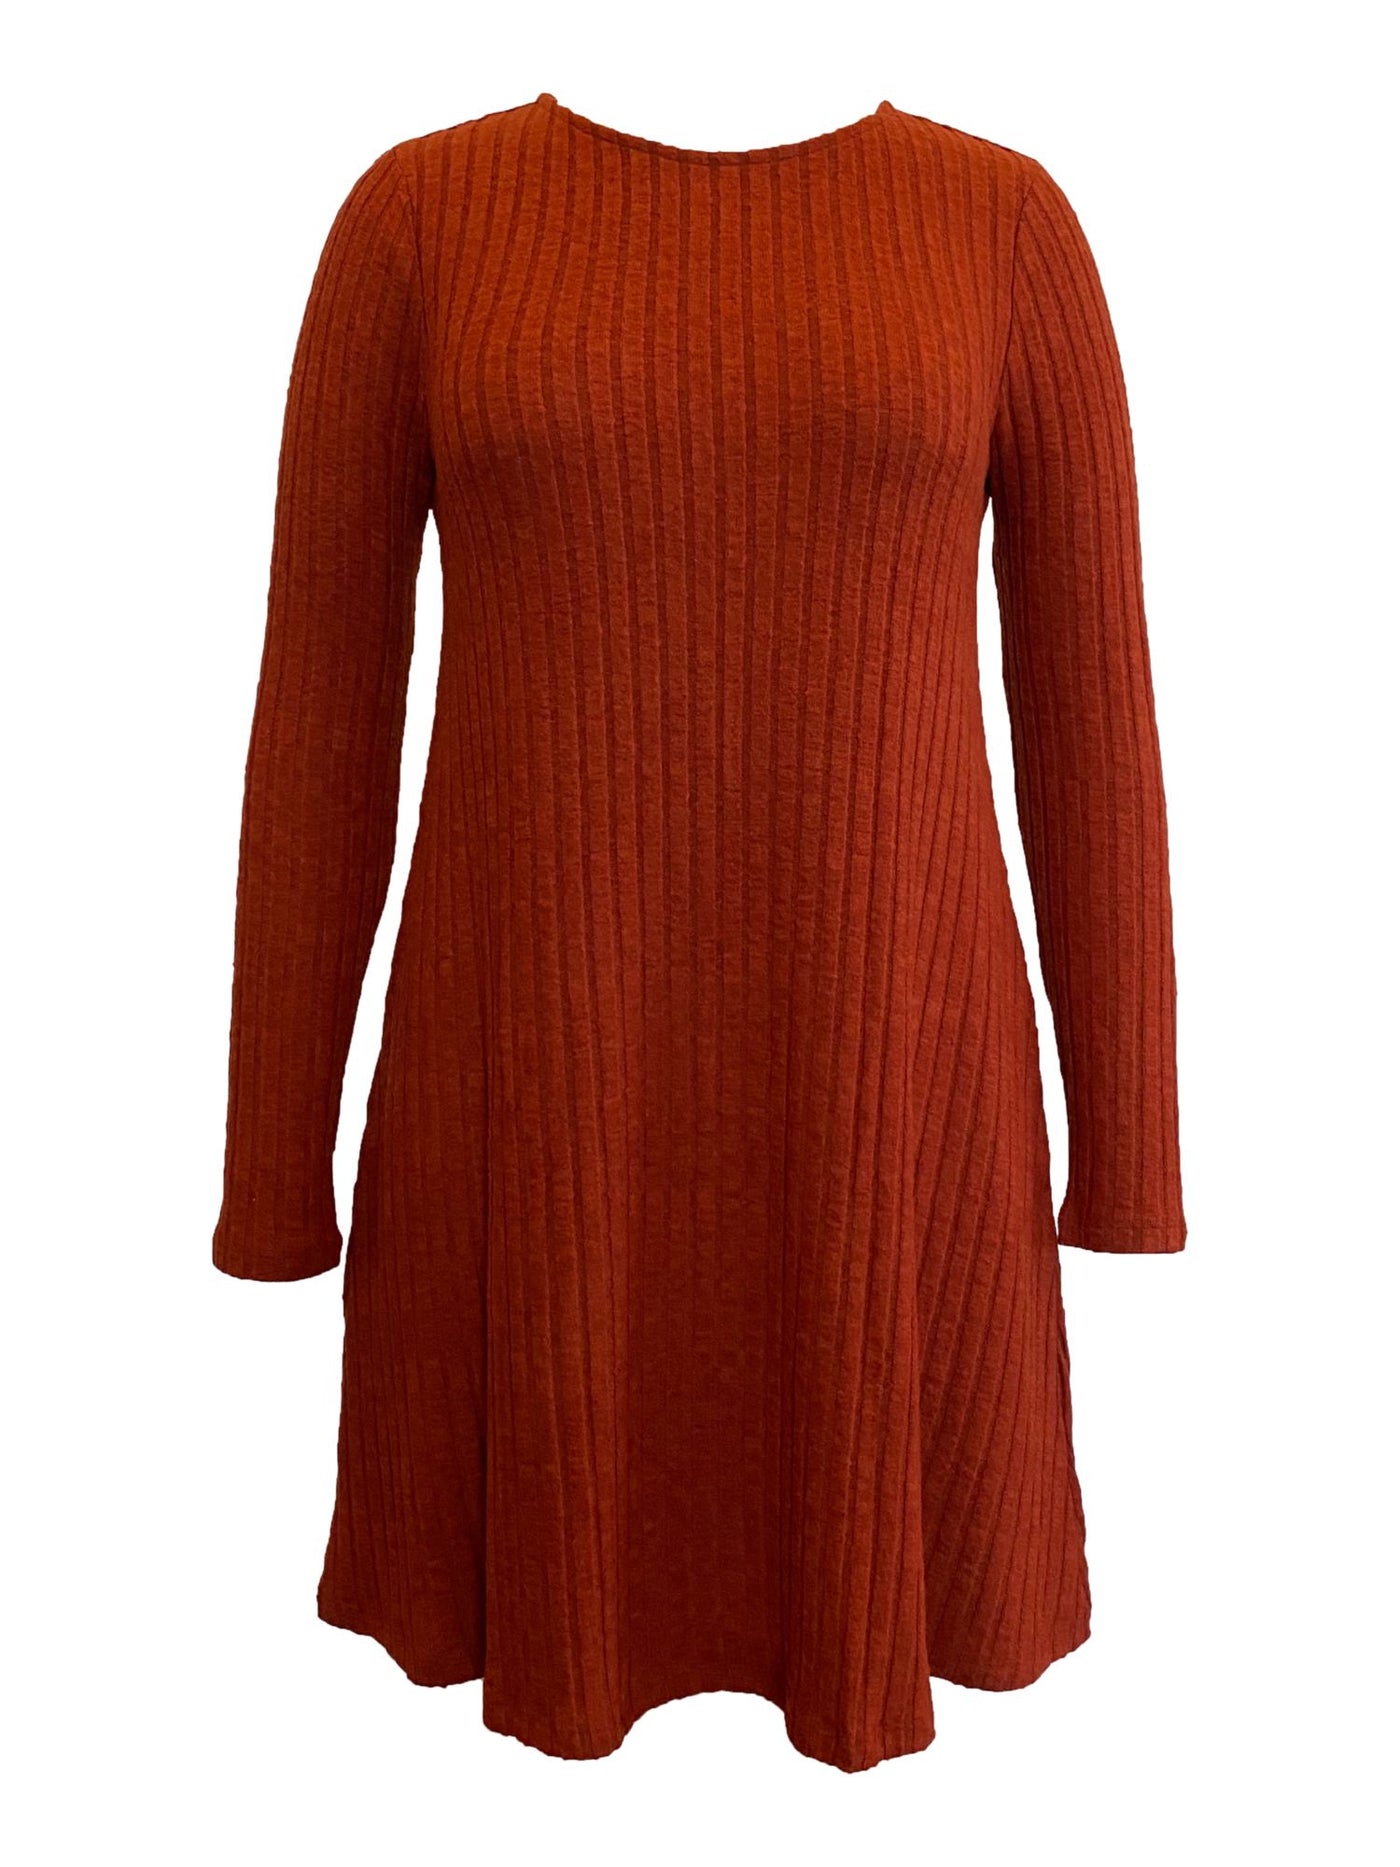 STYLE & COMPANY Womens Orange 3/4 Sleeve Scoop Neck Short Shift Dress M